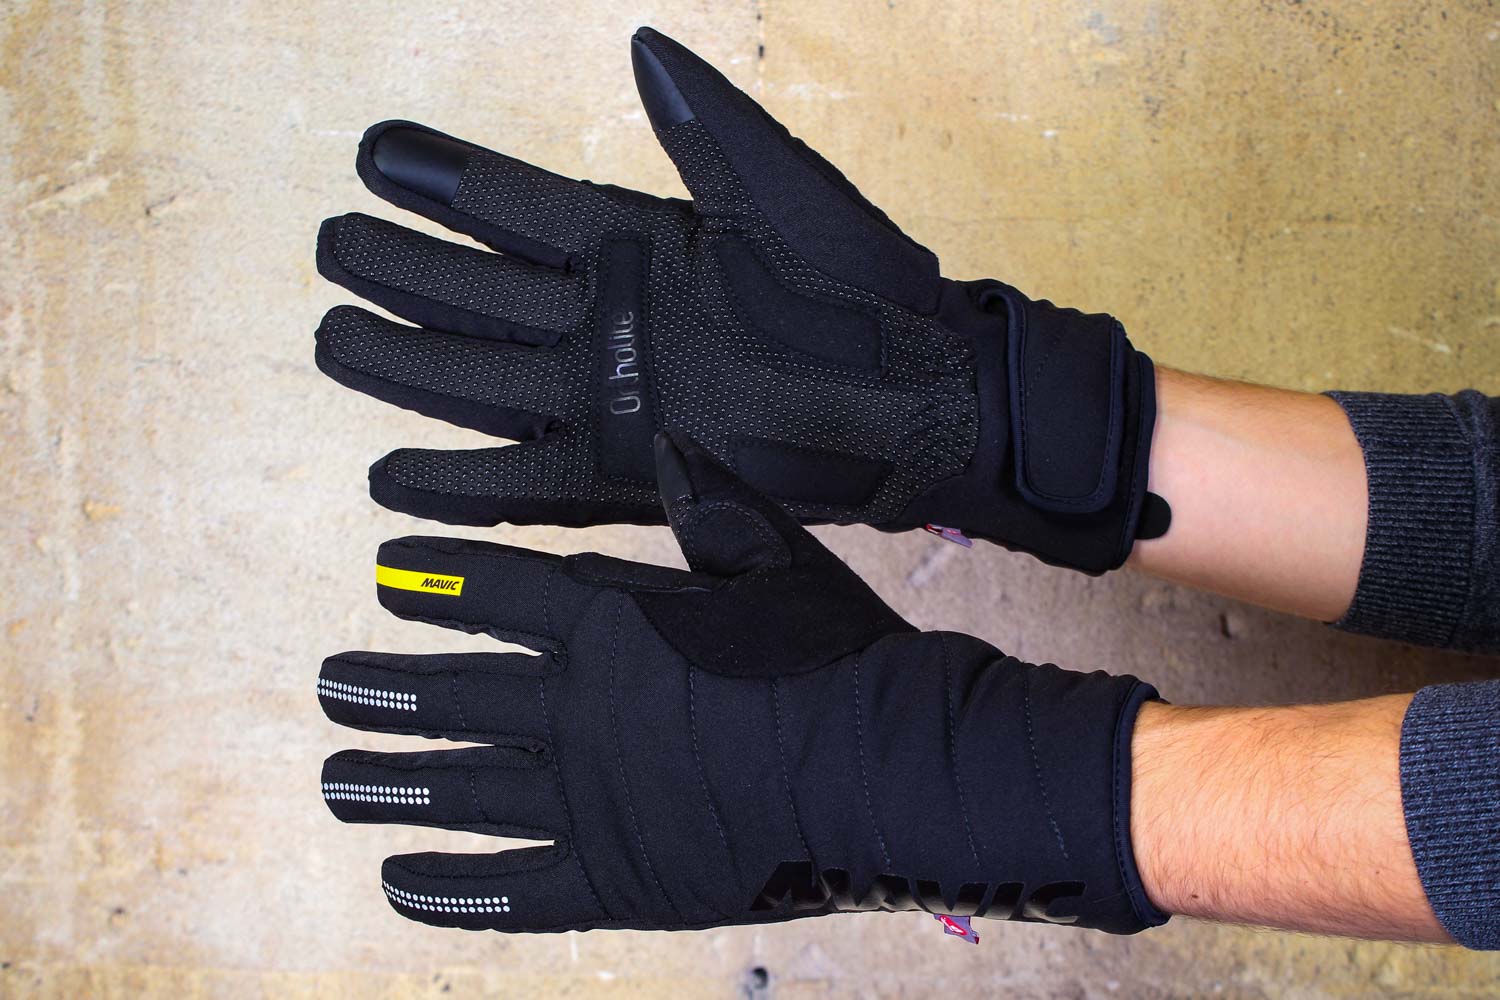 mavic winter gloves